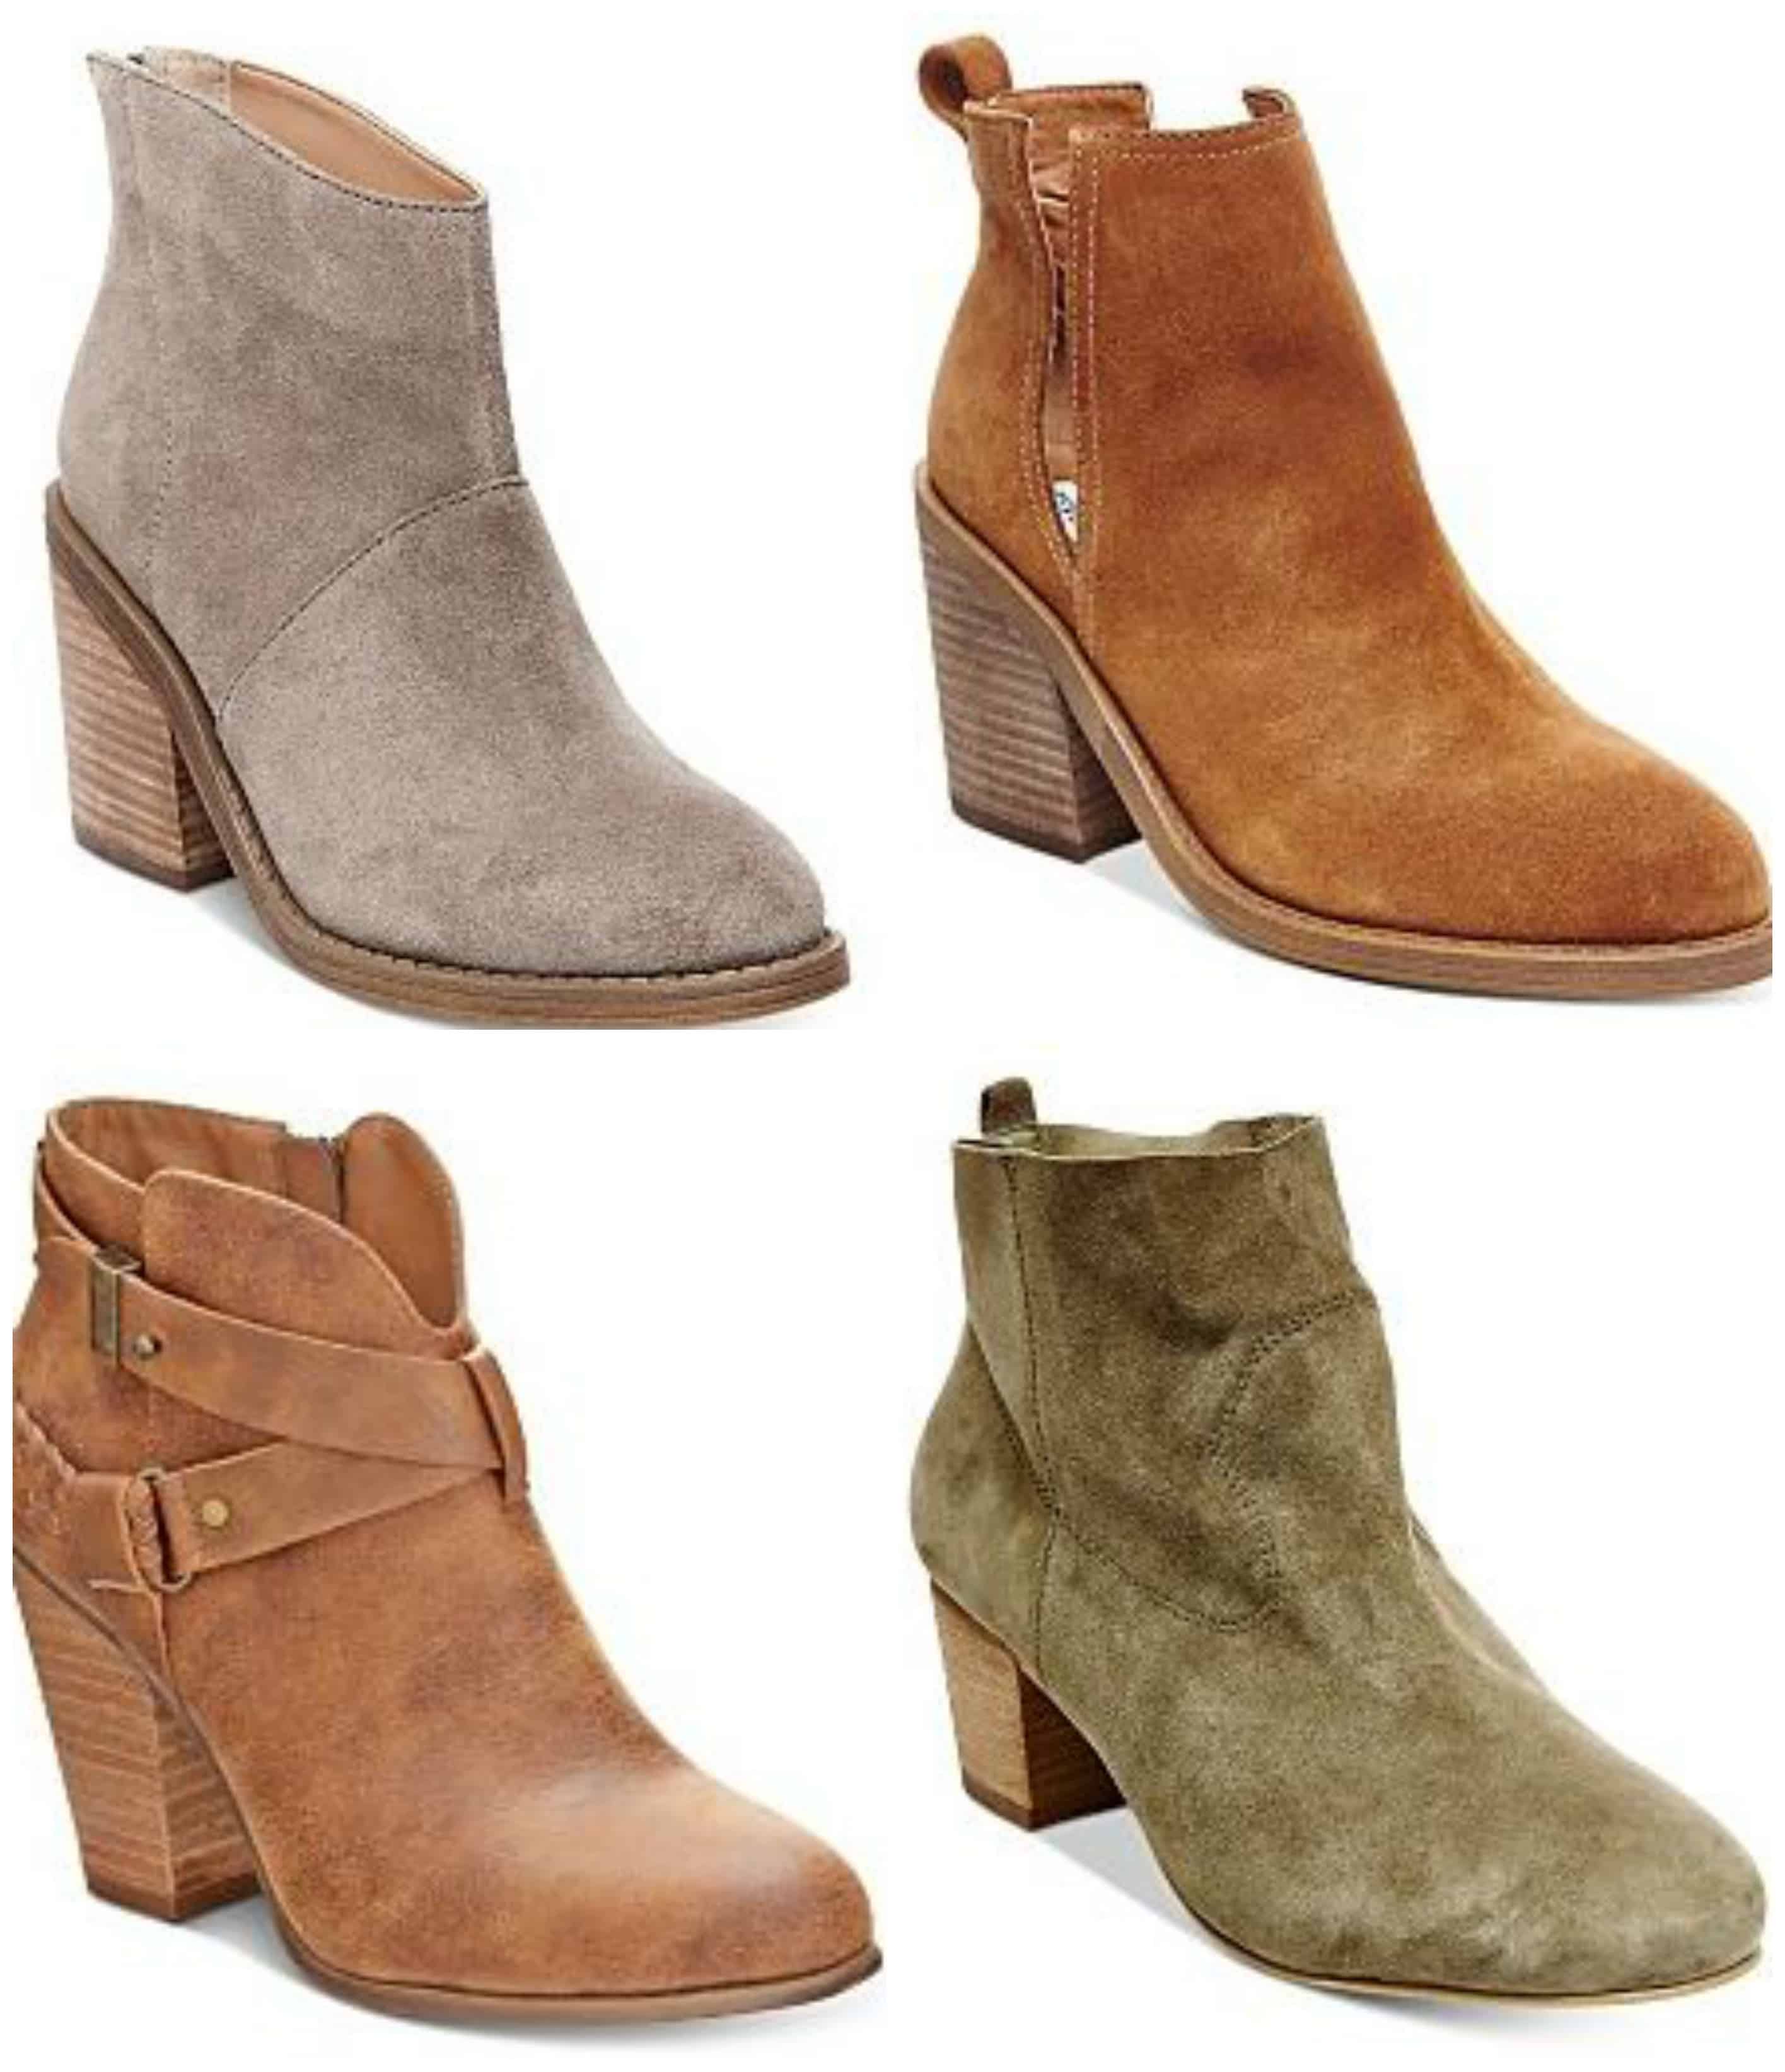 Get 75% off Women's Boots at Macys.com